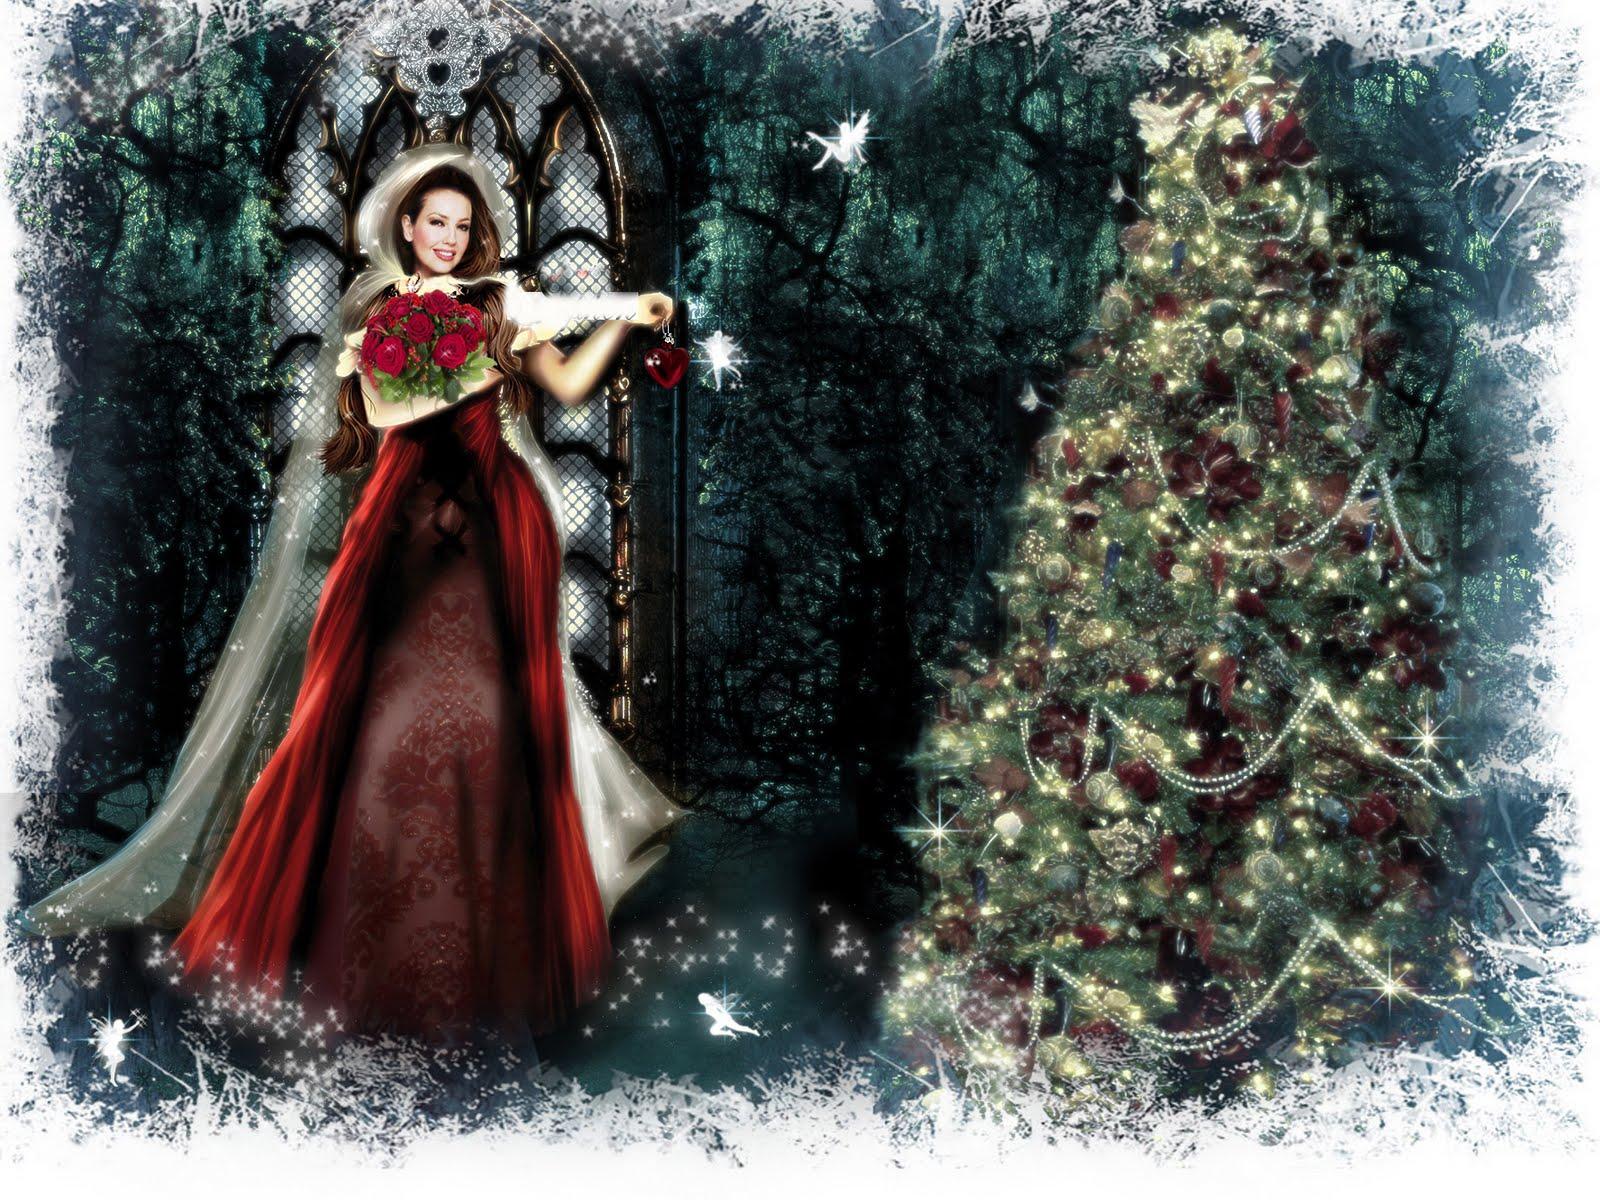 Free Christmas Desktop Wallpaper: Christmas Fairy Desktop